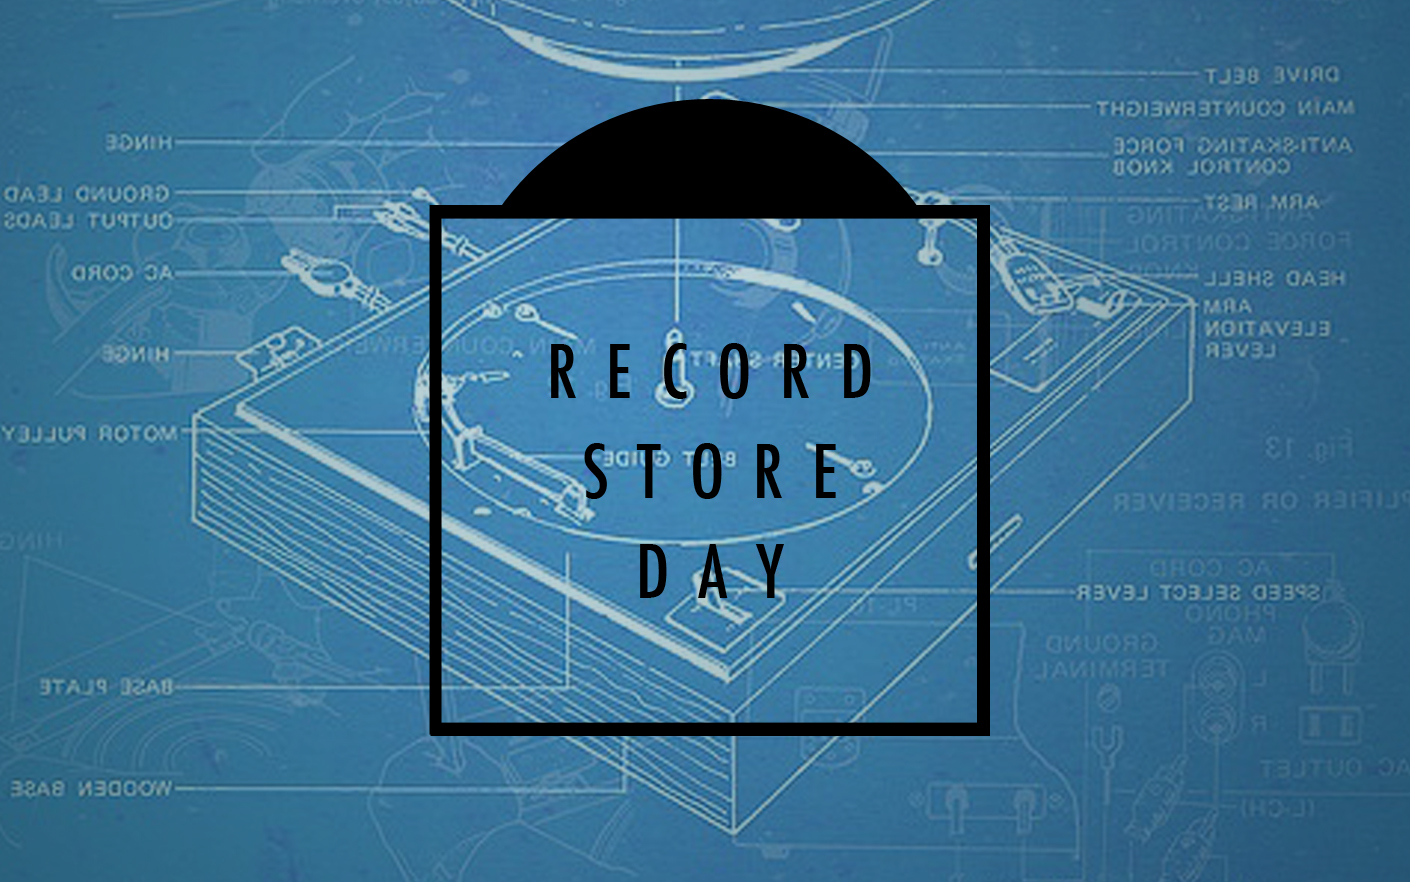 discosalt » Record Store Day 2014